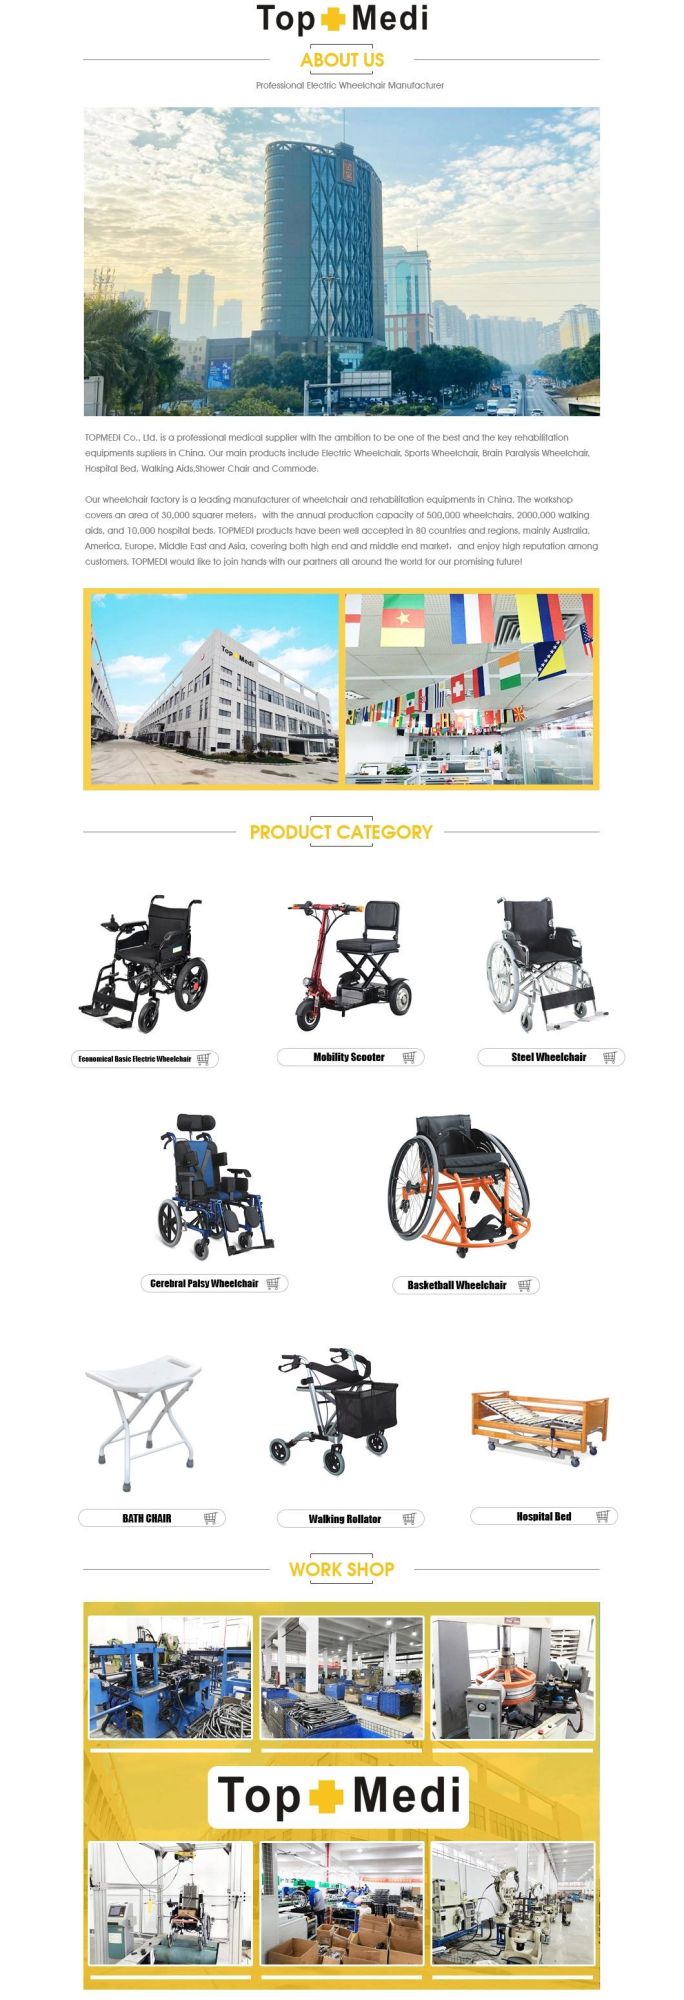 4 Wheels Walking Walker Rollator for Elderly and Disabled People